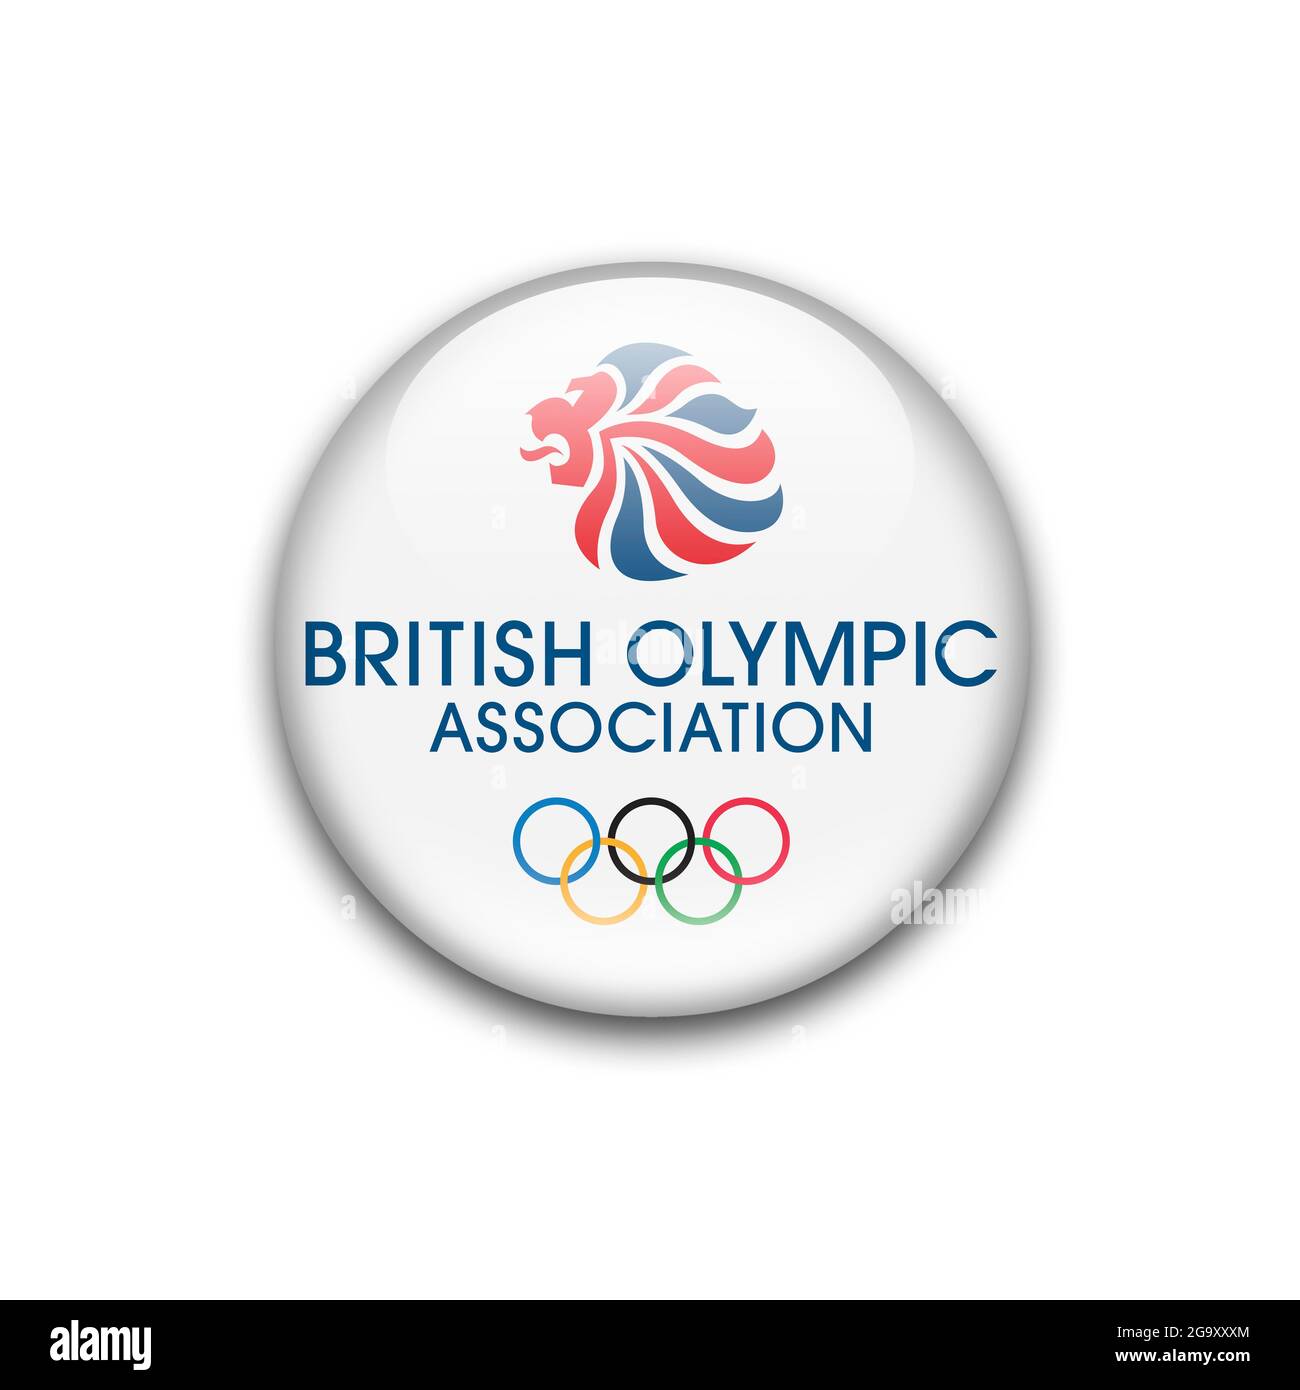 British Olympic Association logo Stock Photo